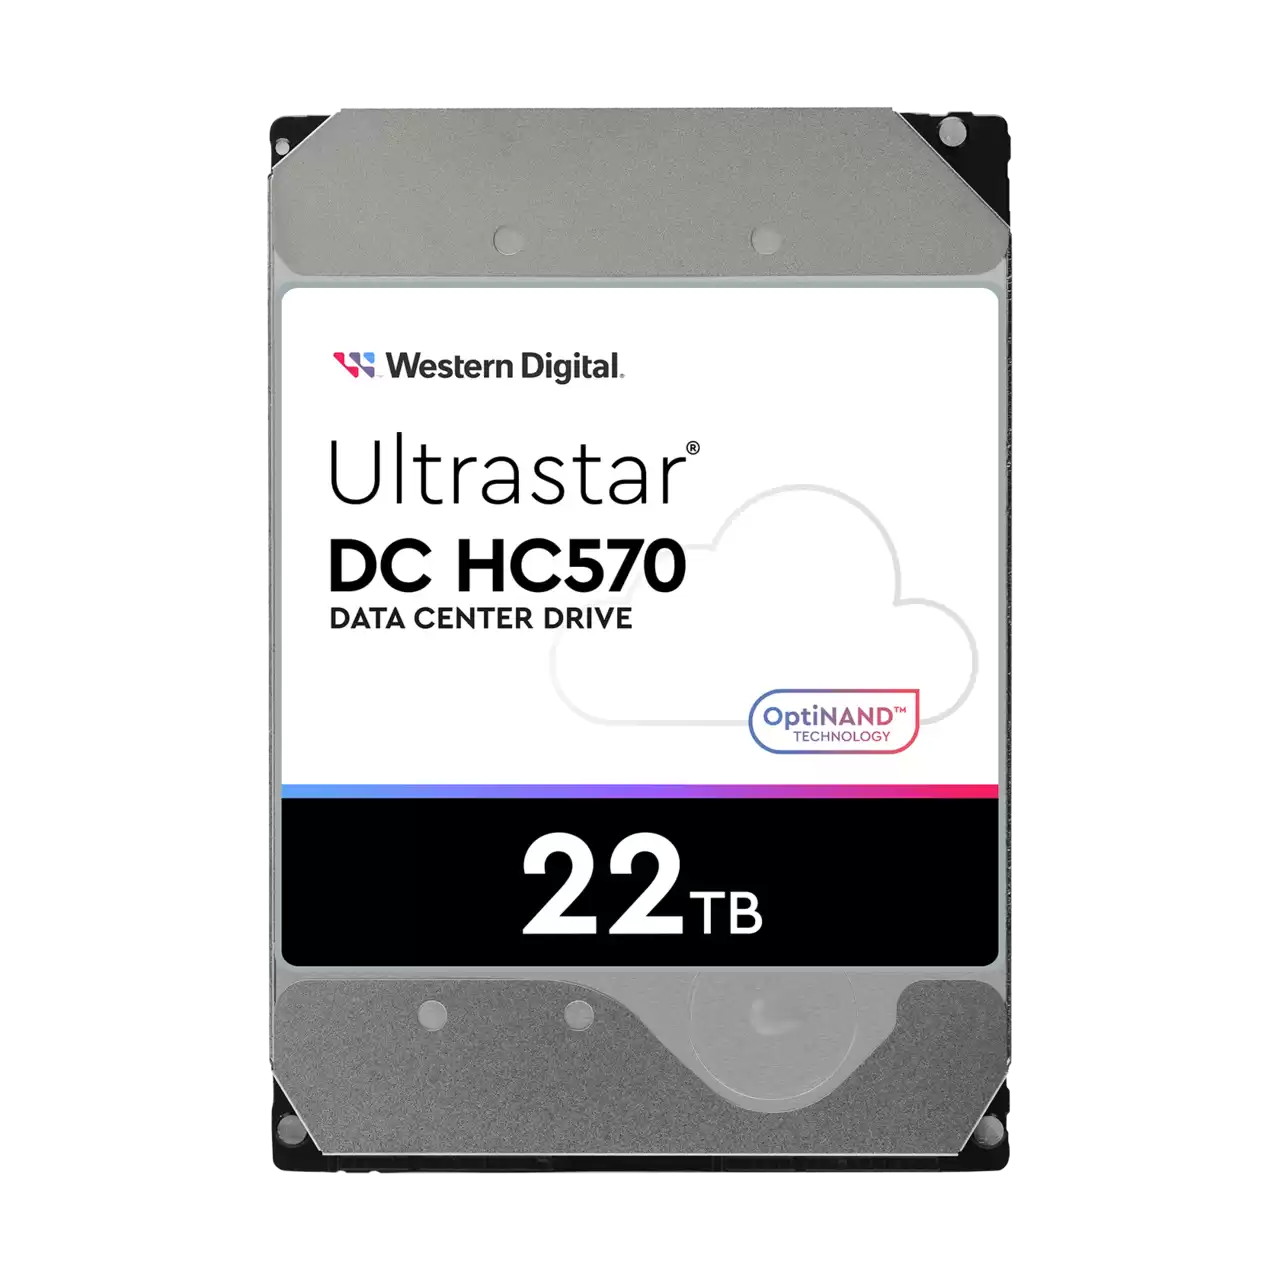 Хард диск WD Ultrastar DC HC570, 22TB, 7200RPM, SATA 6GB/s - WUH722222ALE6L4